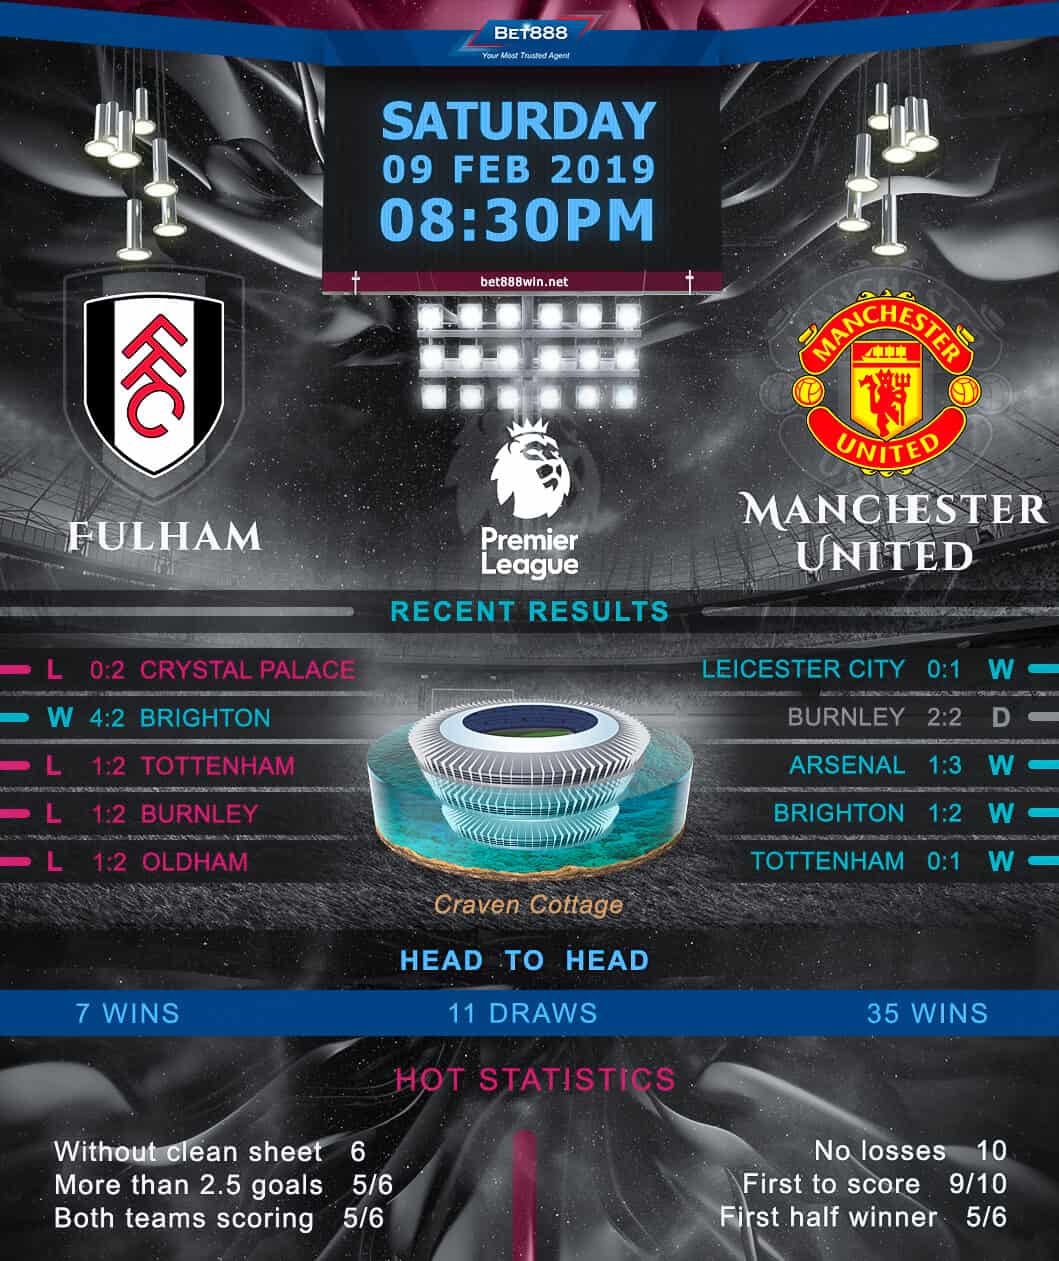 Fulham vs Manchester United 09/02/19